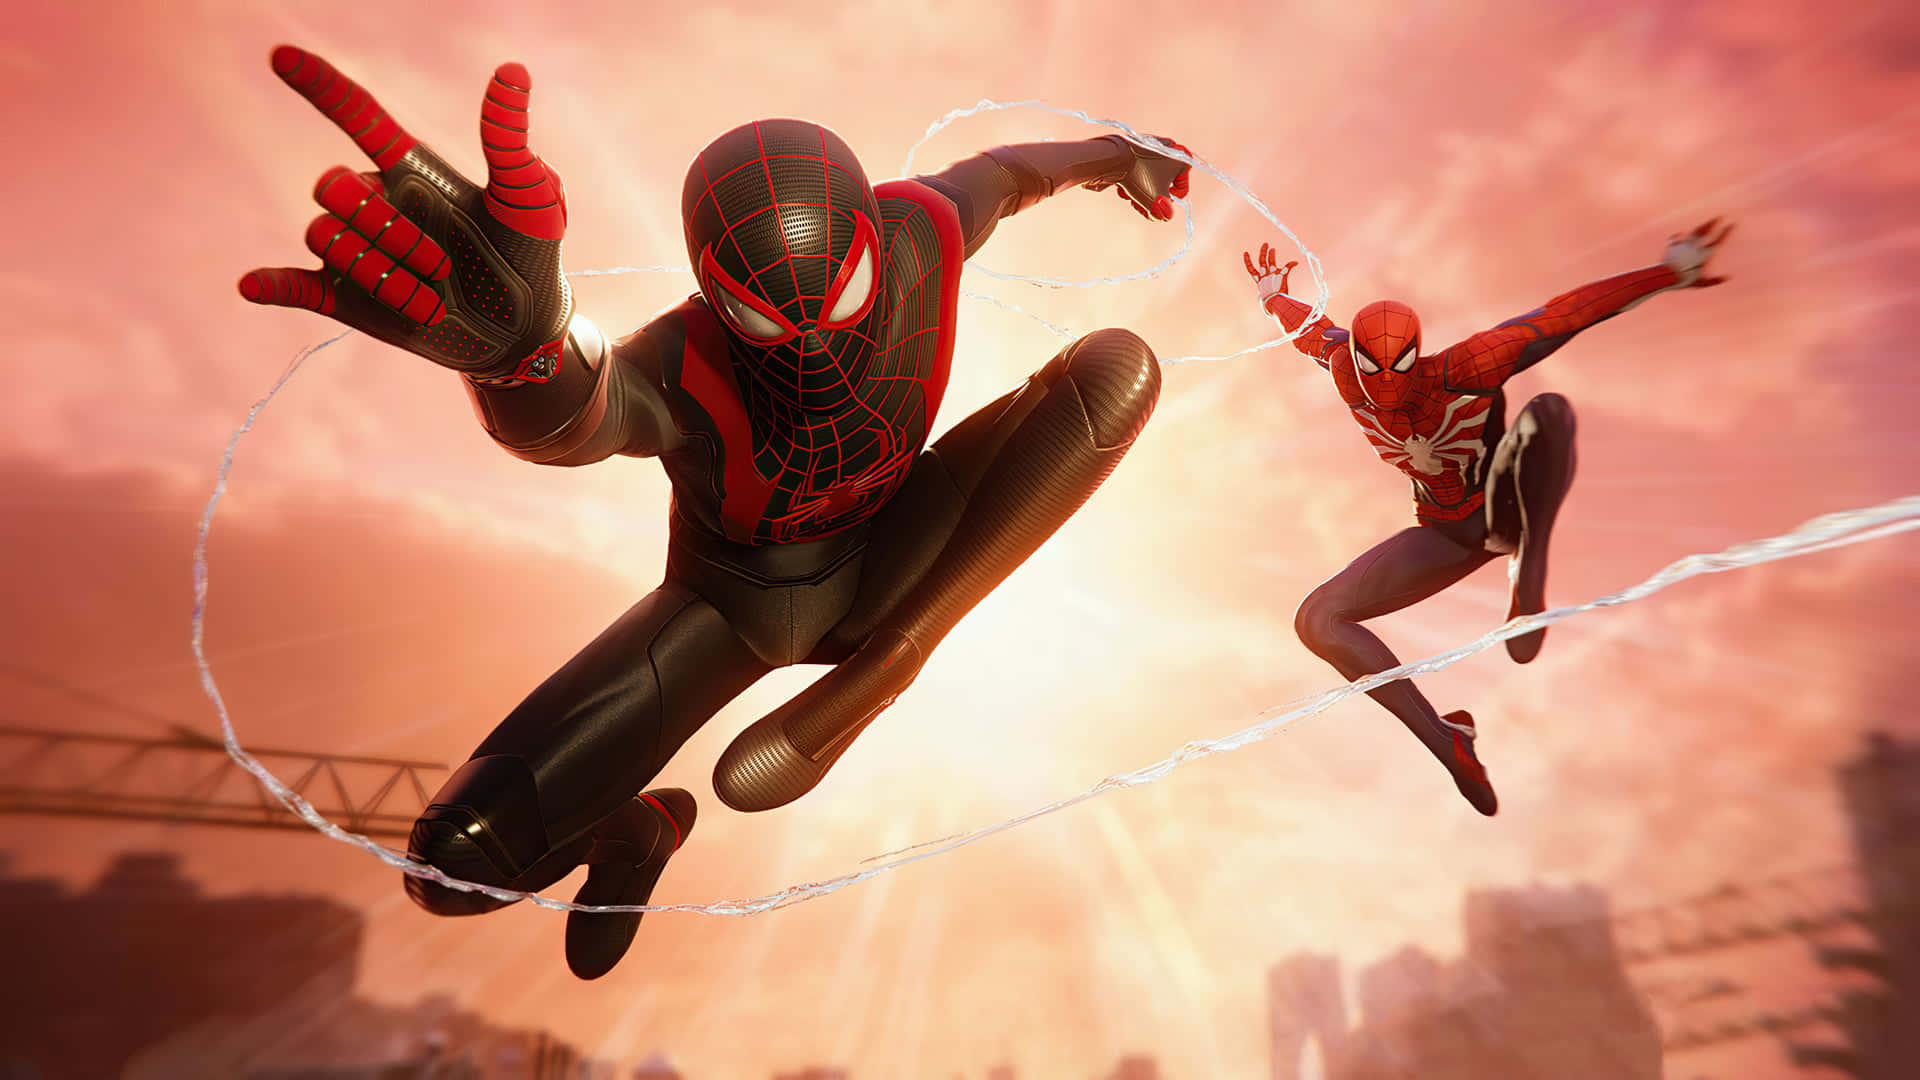 Spider-Man Web Slinging in Action Wallpaper